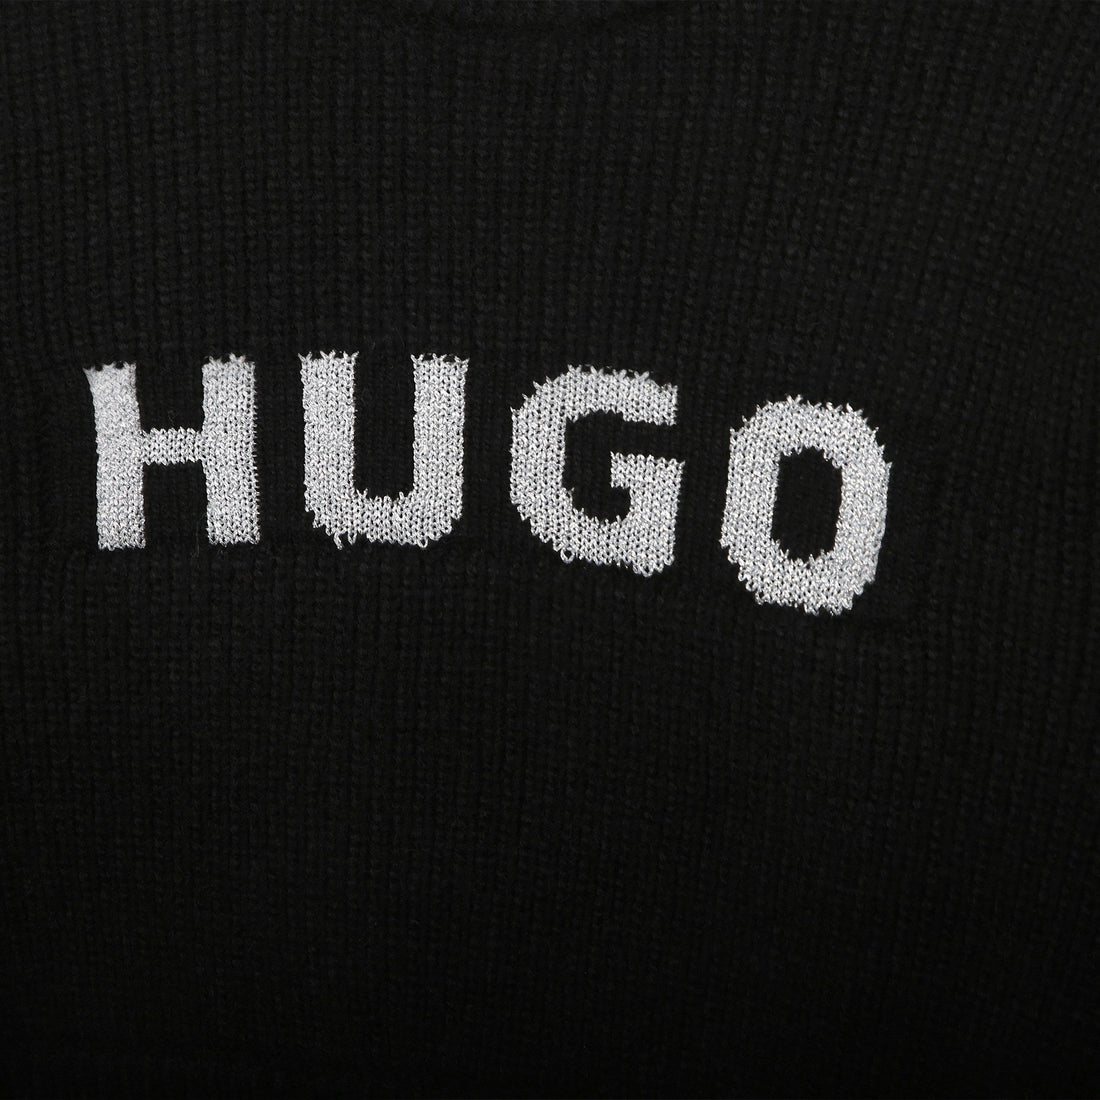 Sweater Cropped Negro HUGO Lurex Niña